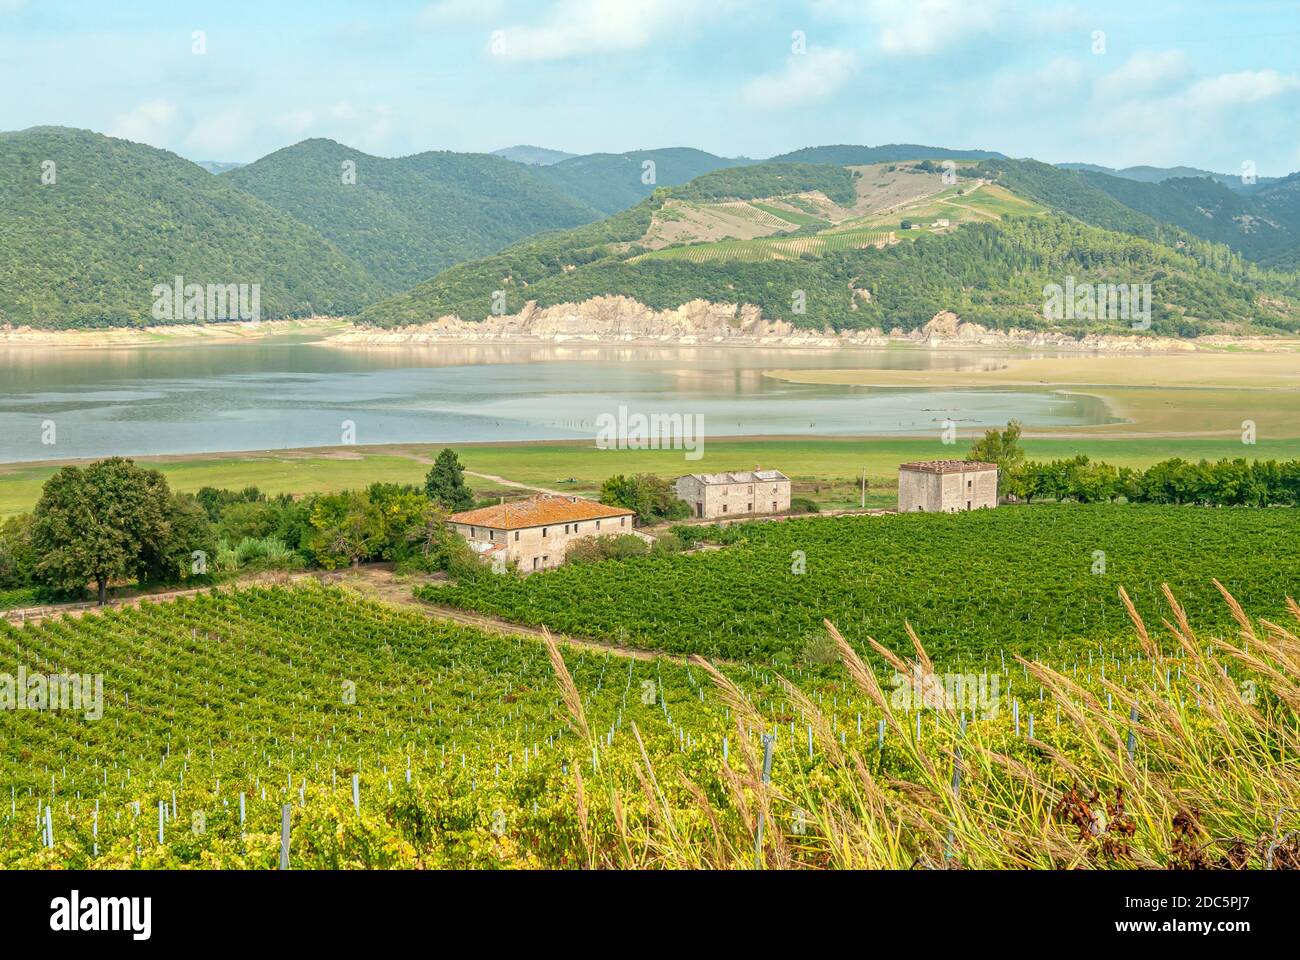 Lakeshore vineyard at Lake Corbara, Umbria, Italy Stock Photo